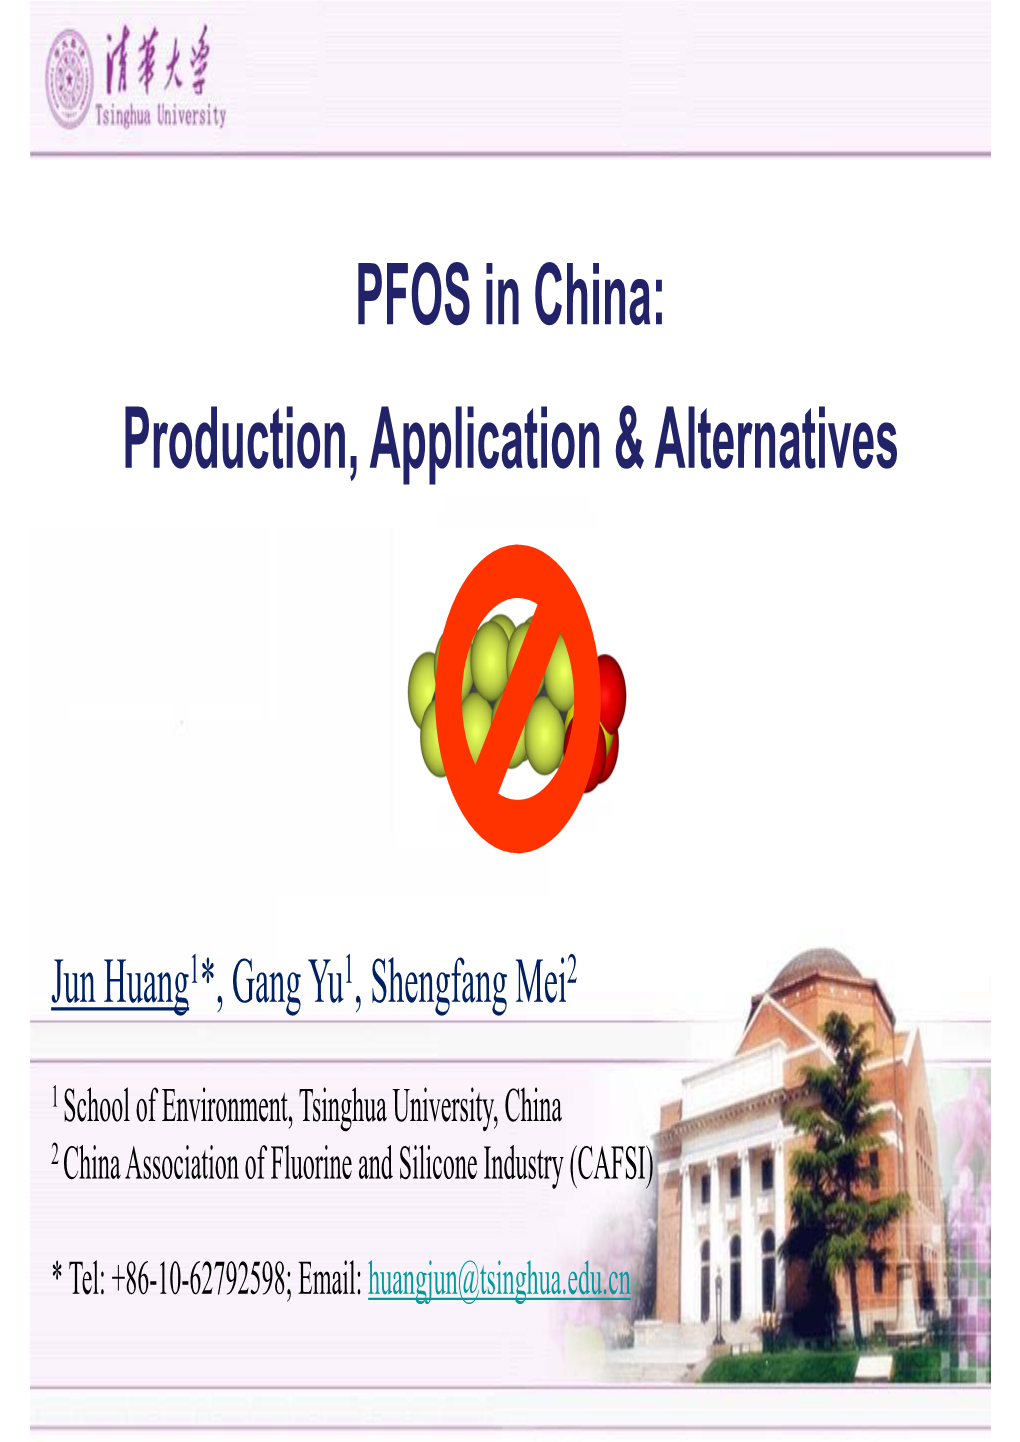 PFOS in China: Production, Application & Alternatives